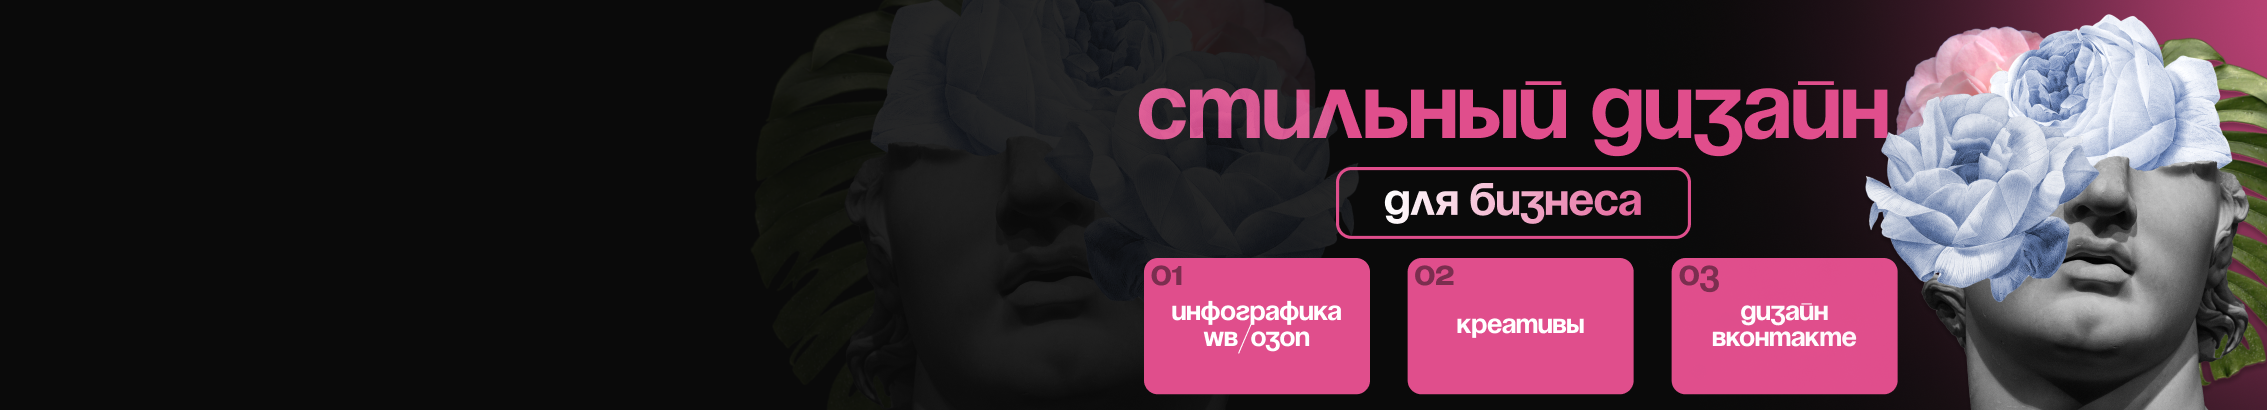 Юлия Кузнецова's profile banner